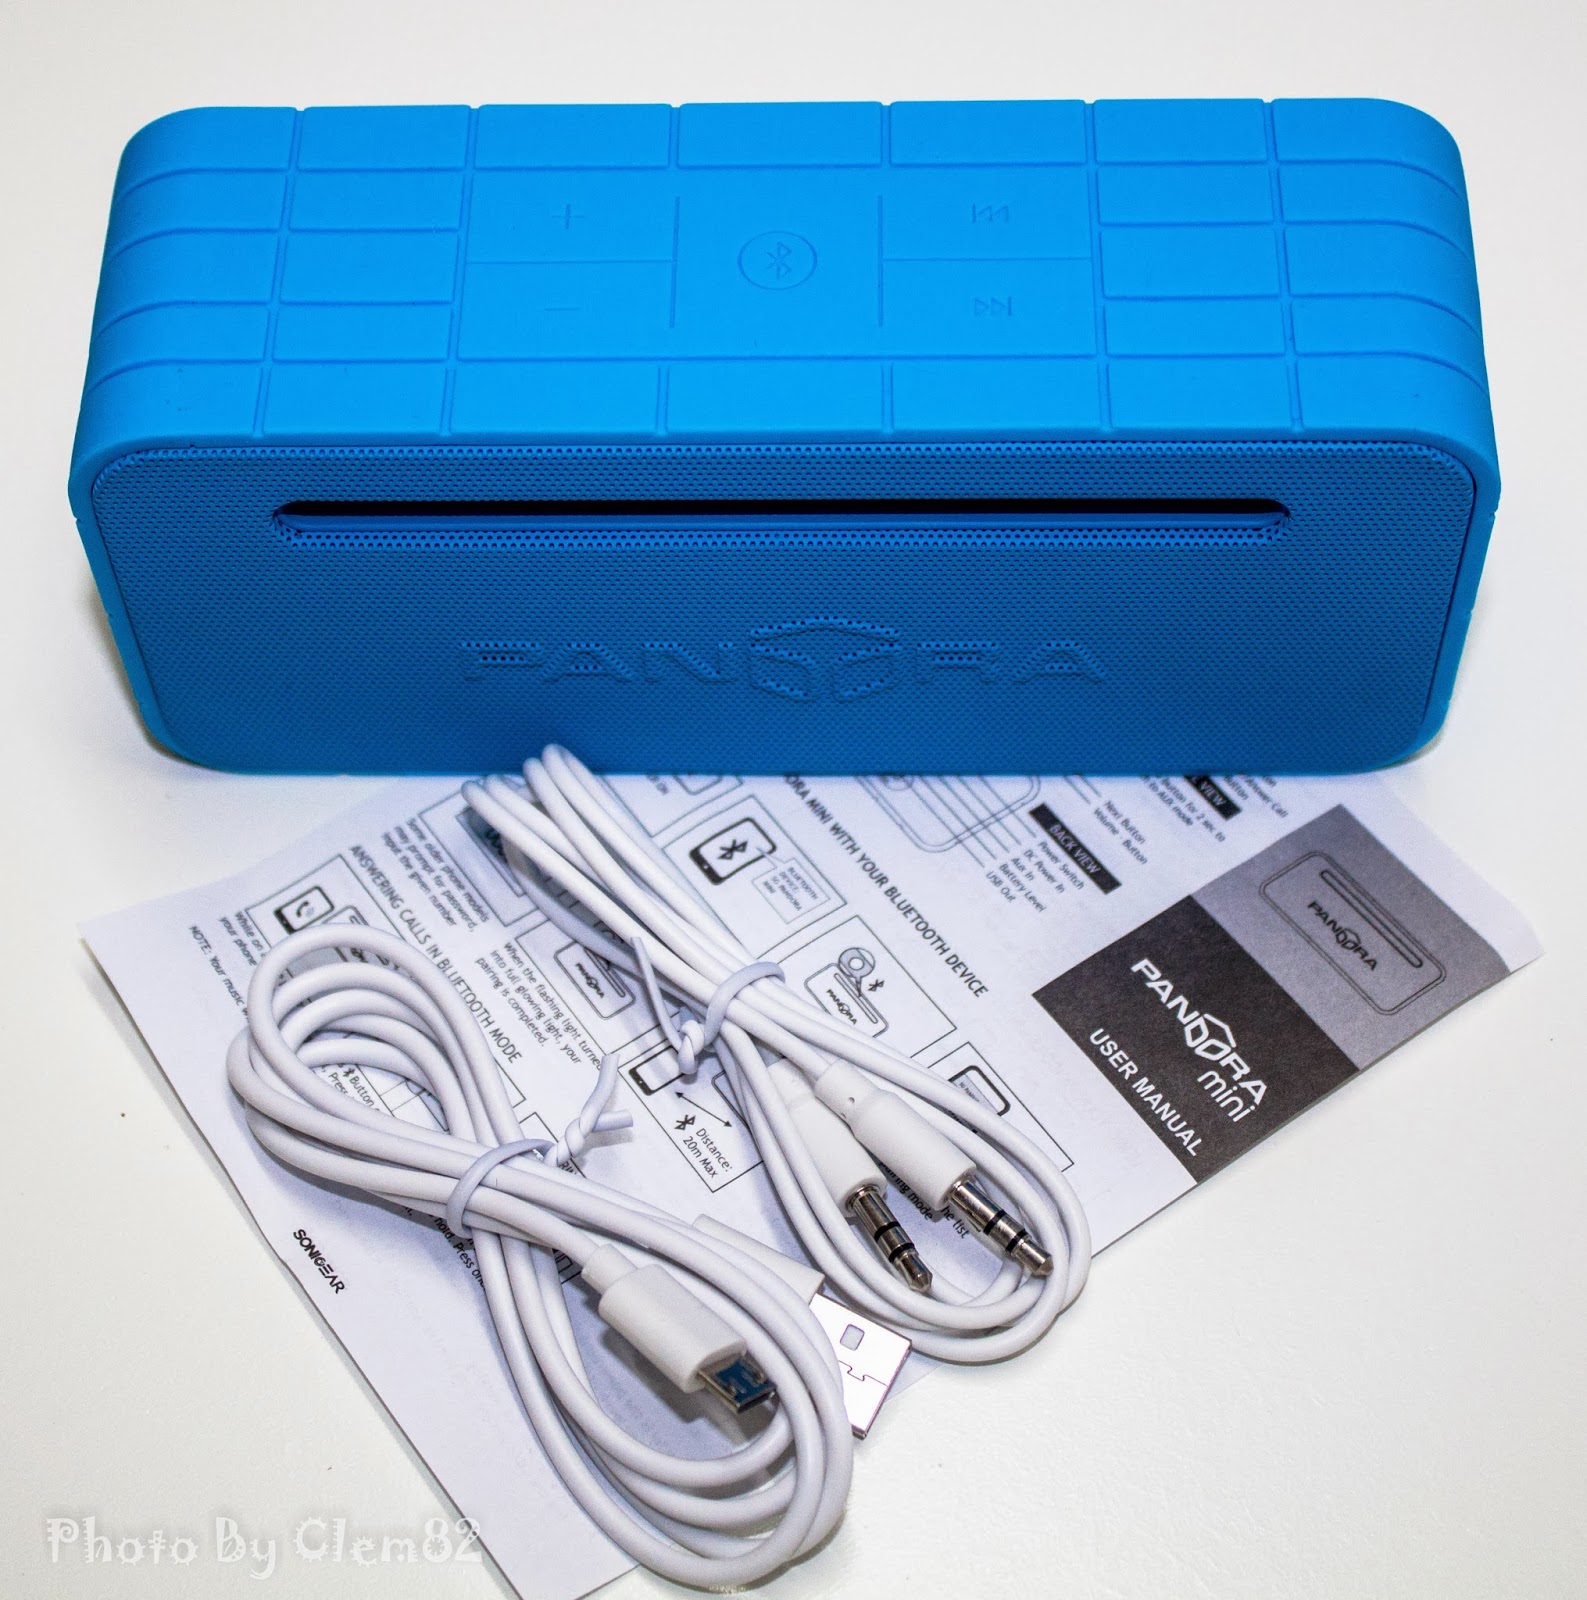 Opening Pandora's Box: SonicGear Pandora Wireless Bluetooth Media Player Series 24